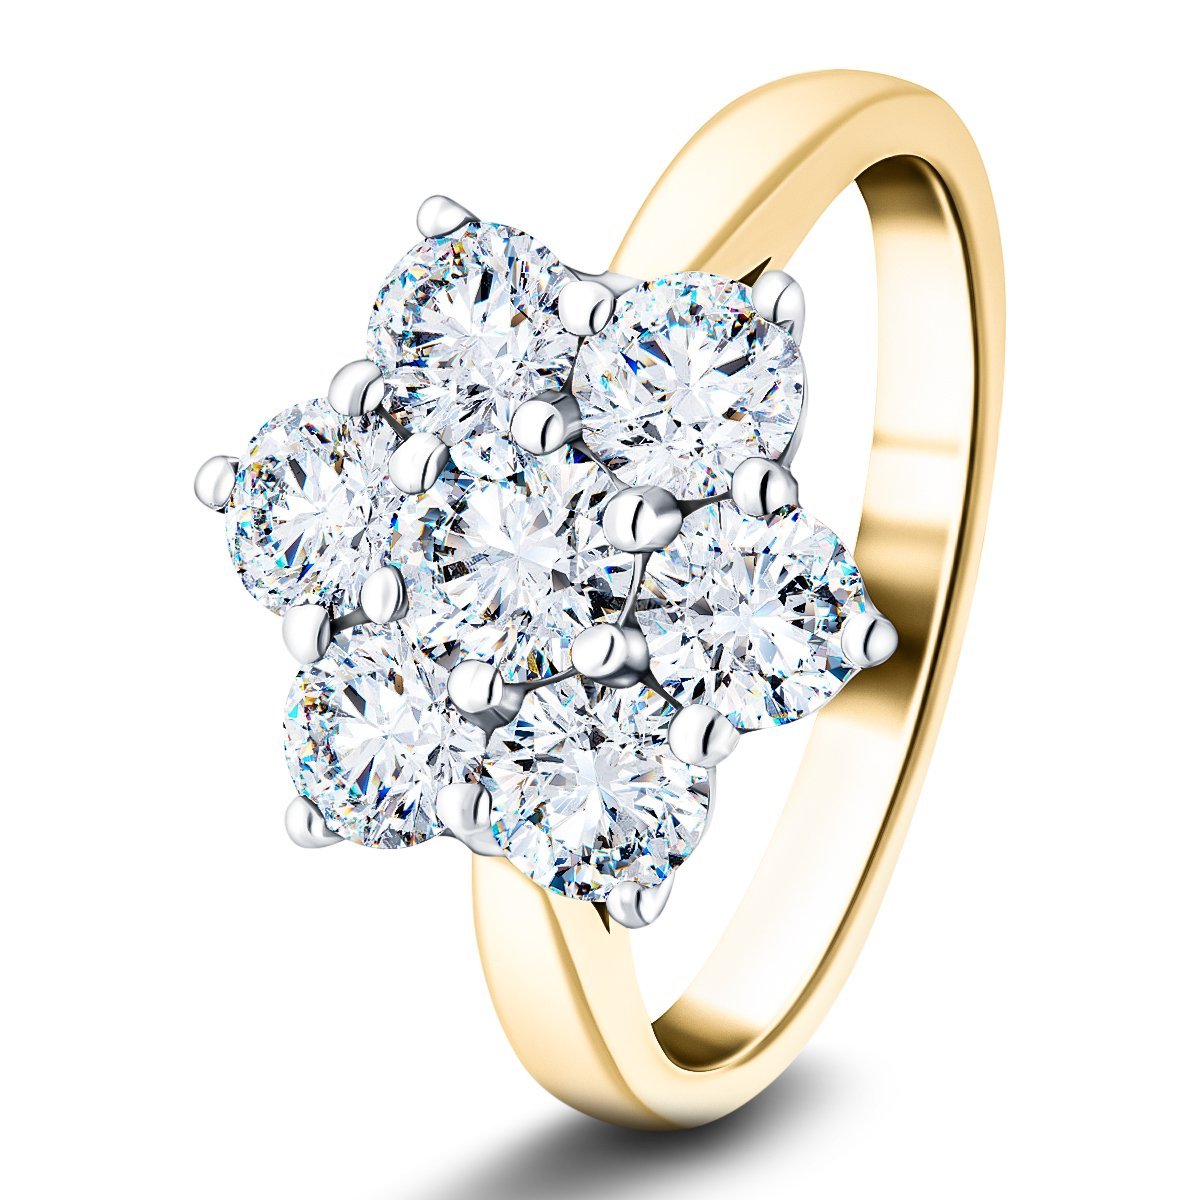 Diamond 1.60ct G/SI Quality 18k Yellow Gold Cluster Ring - All Diamond